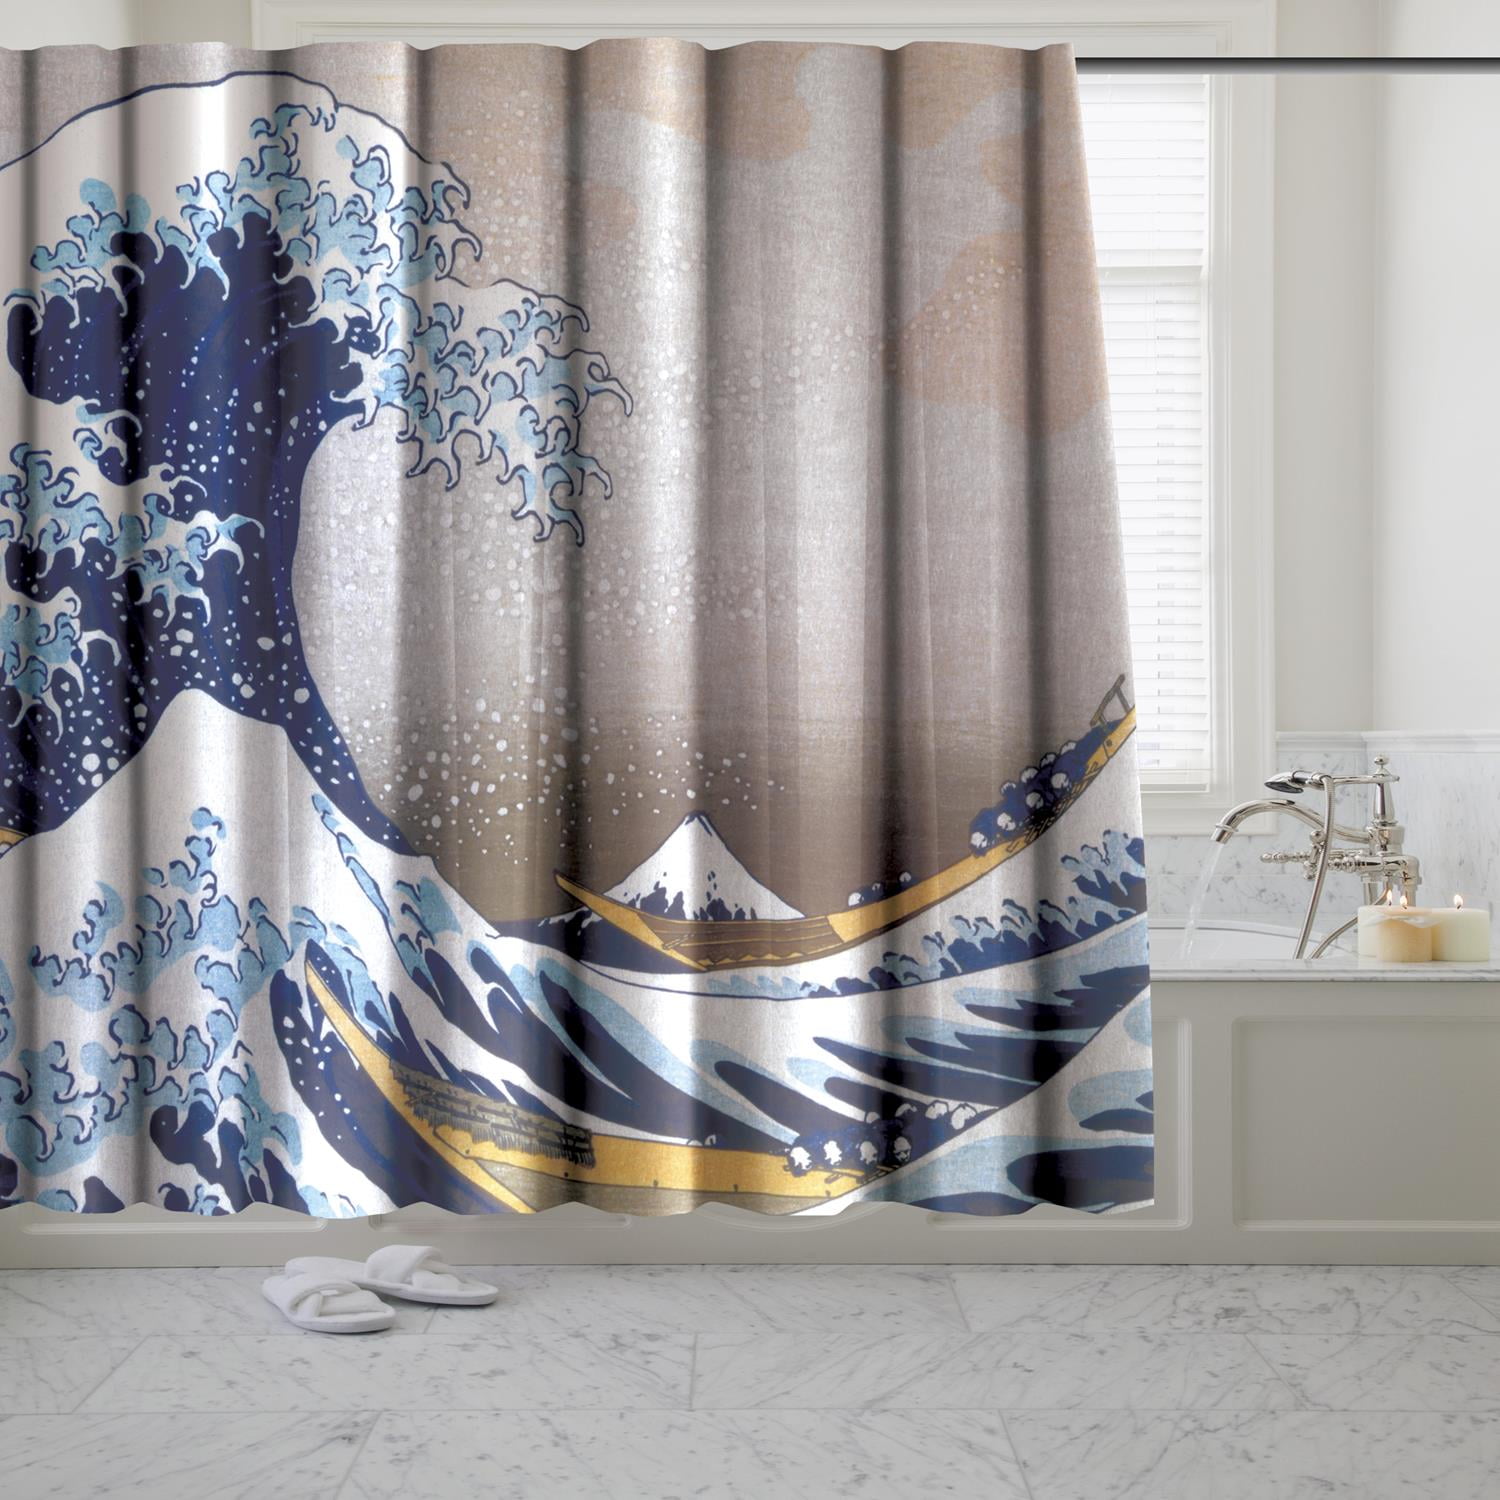 Hot Sale Polyester Waterproof Godzilla Bathroom Shower Curtain 66 x 72 Inch 